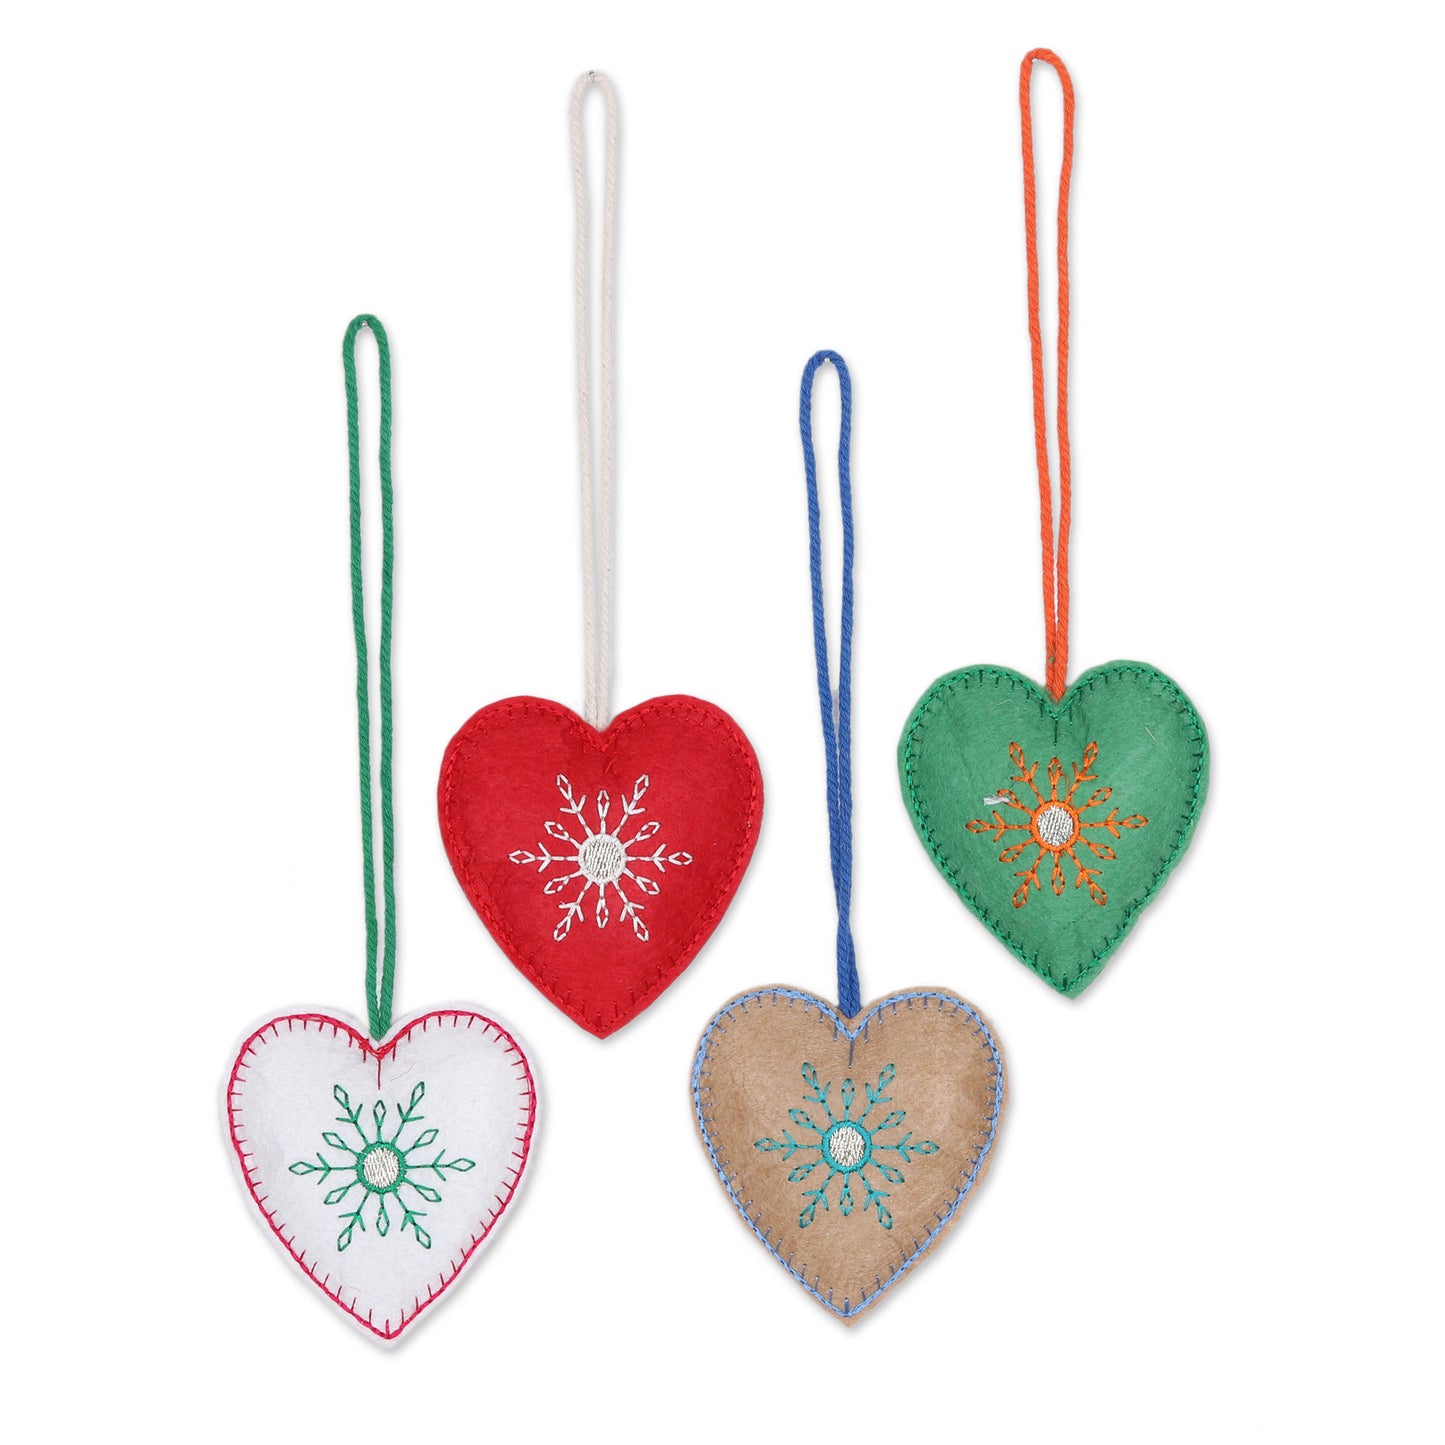 Folk Art Hearts Set of 4 Assorted Color Wool Felt Heart Ornaments